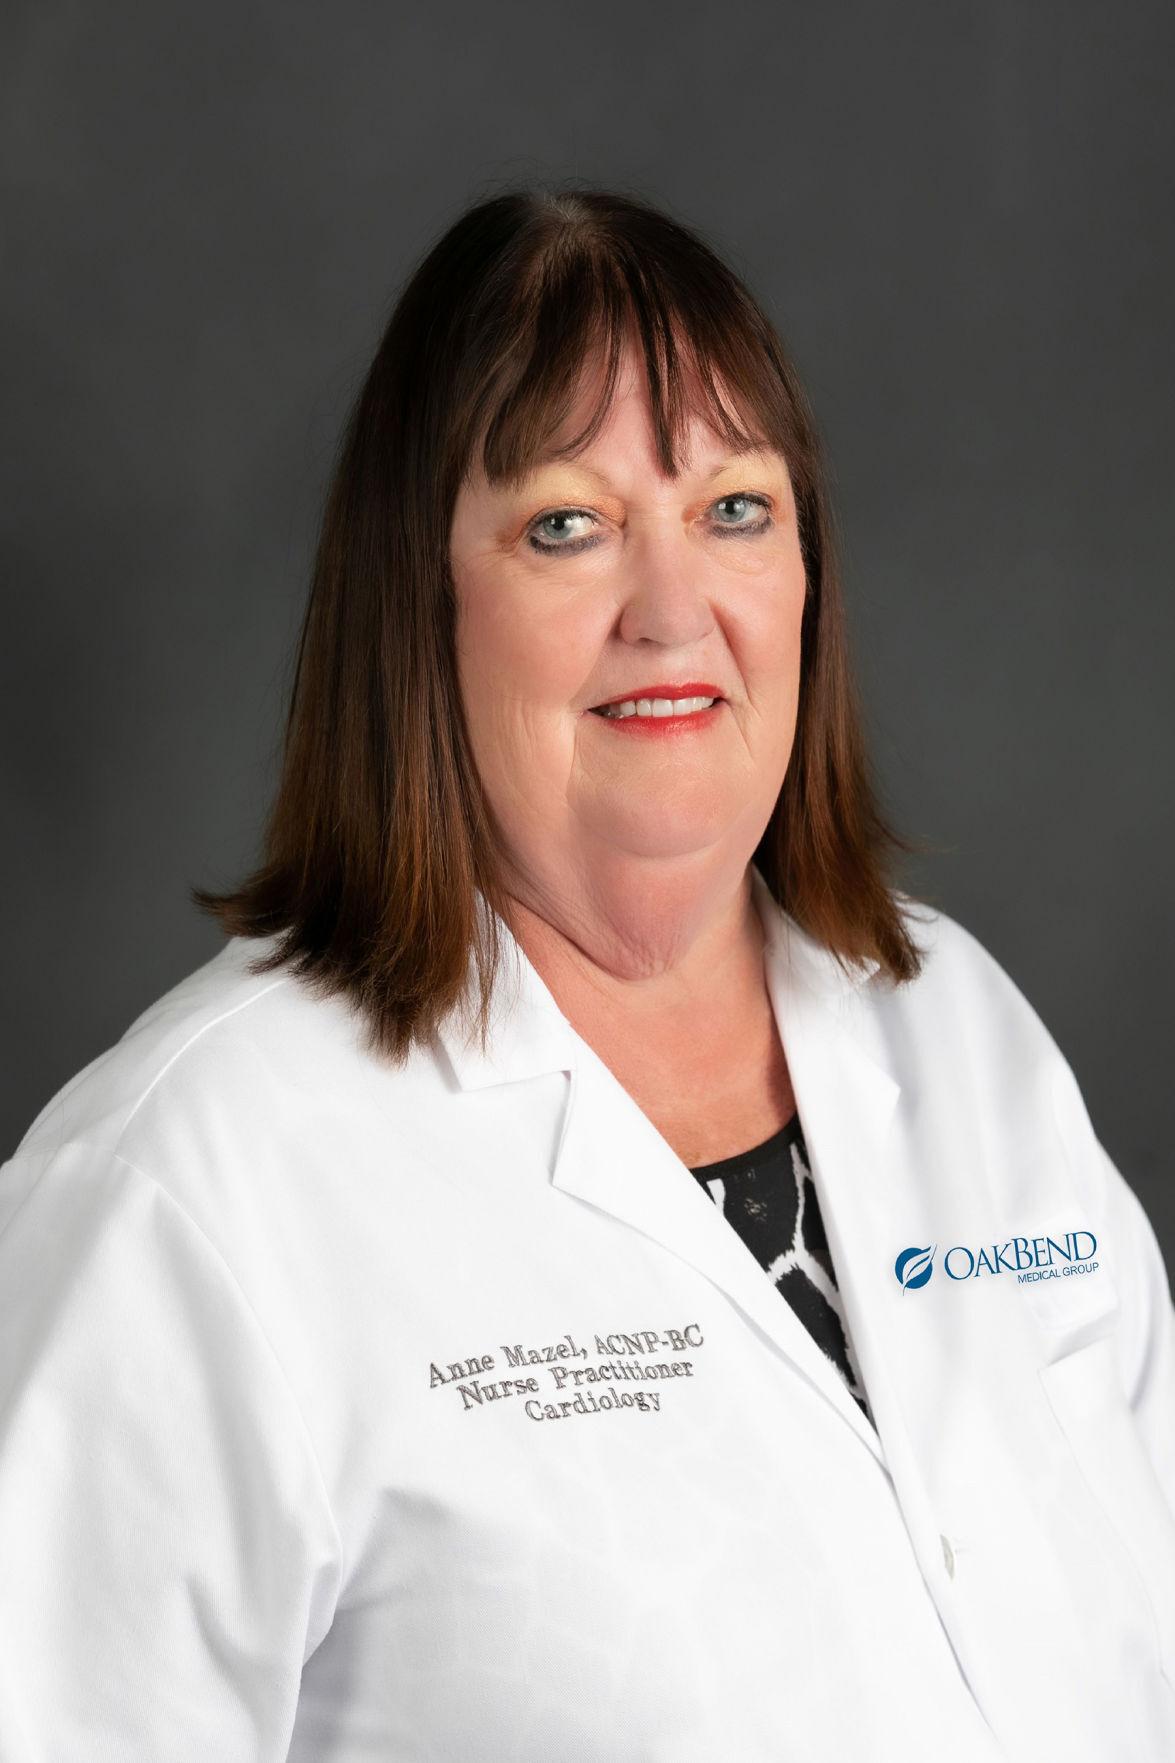 Oakbend Medical Group Announces Newest Nurse Practitioner Anne Mazel Health